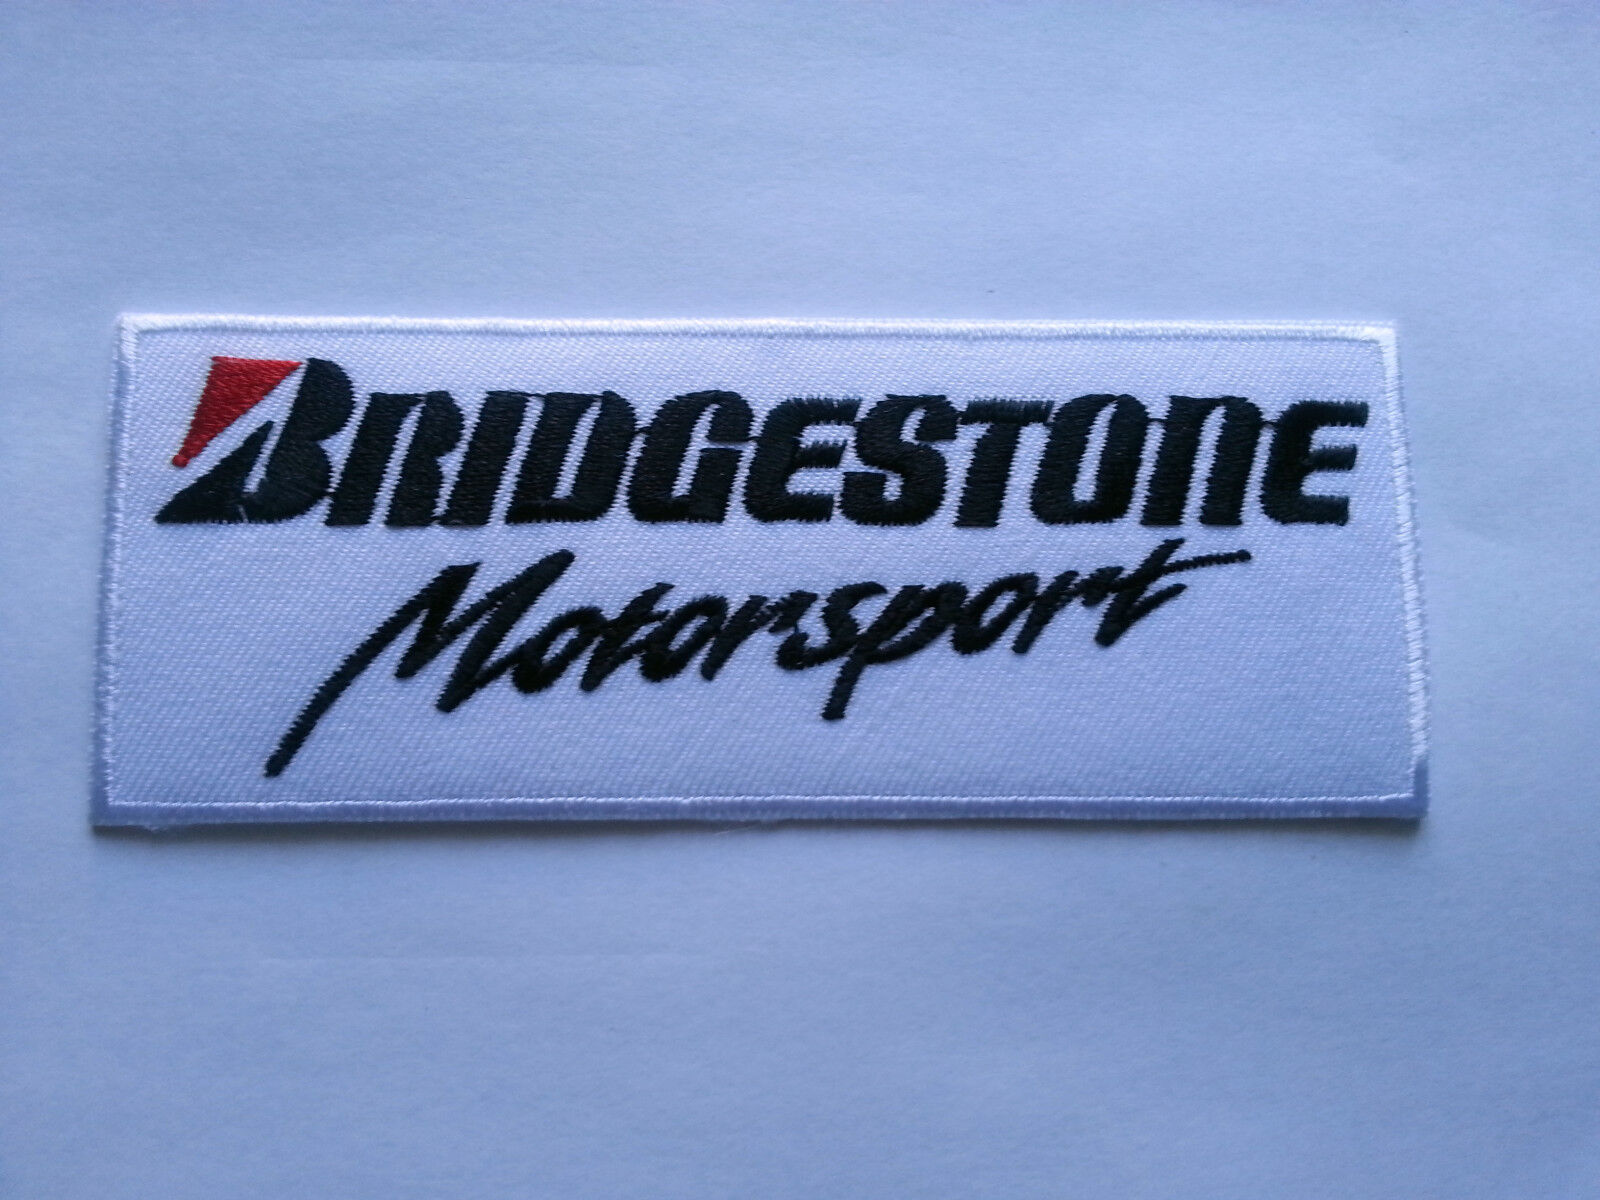 Bridgestone Motorsport Sew / Iron On Patch Motorsports Motor Racing Oils Fuels